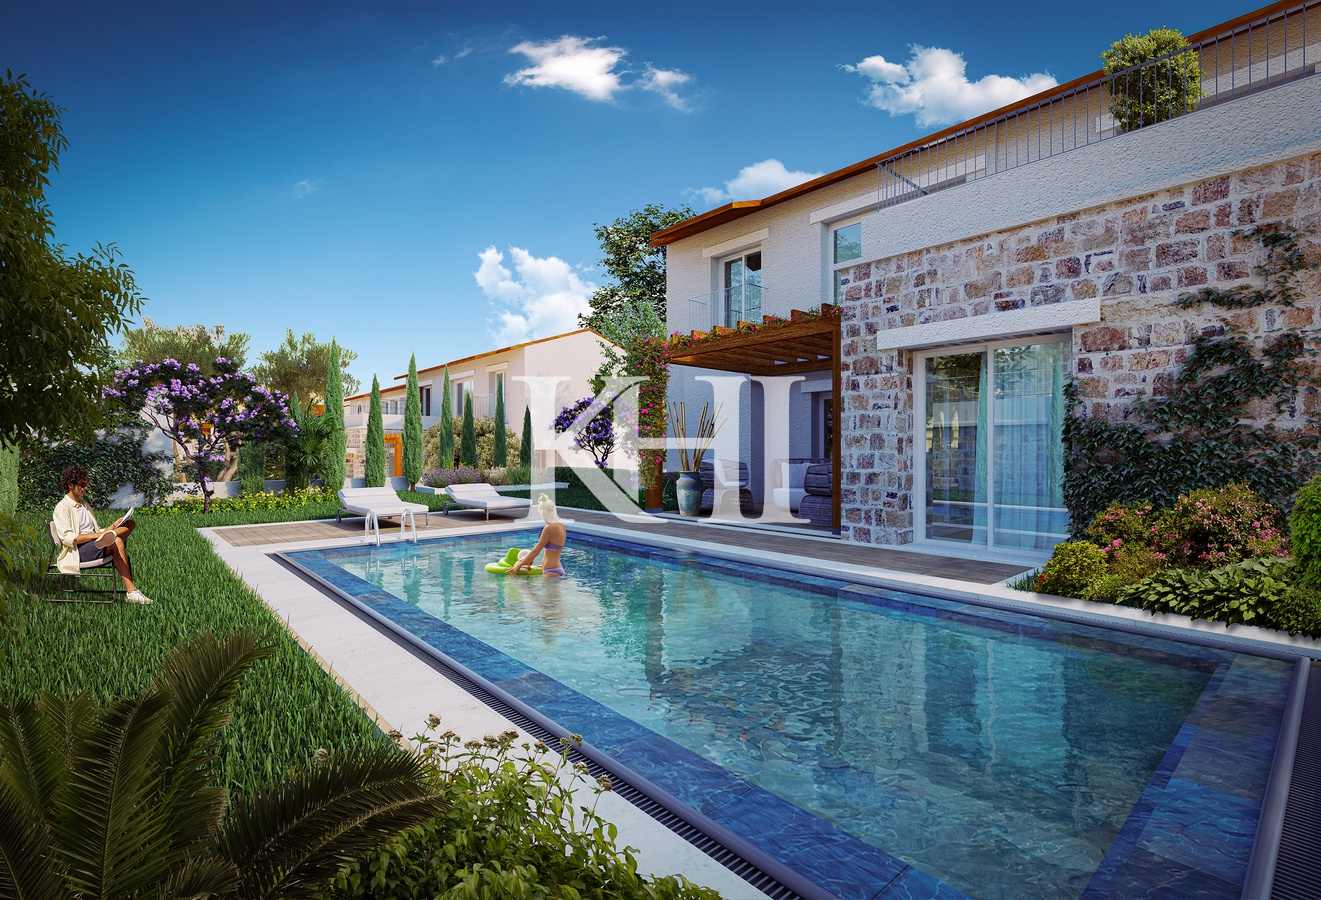 New Villa Project in Bodrum Slide Image 2